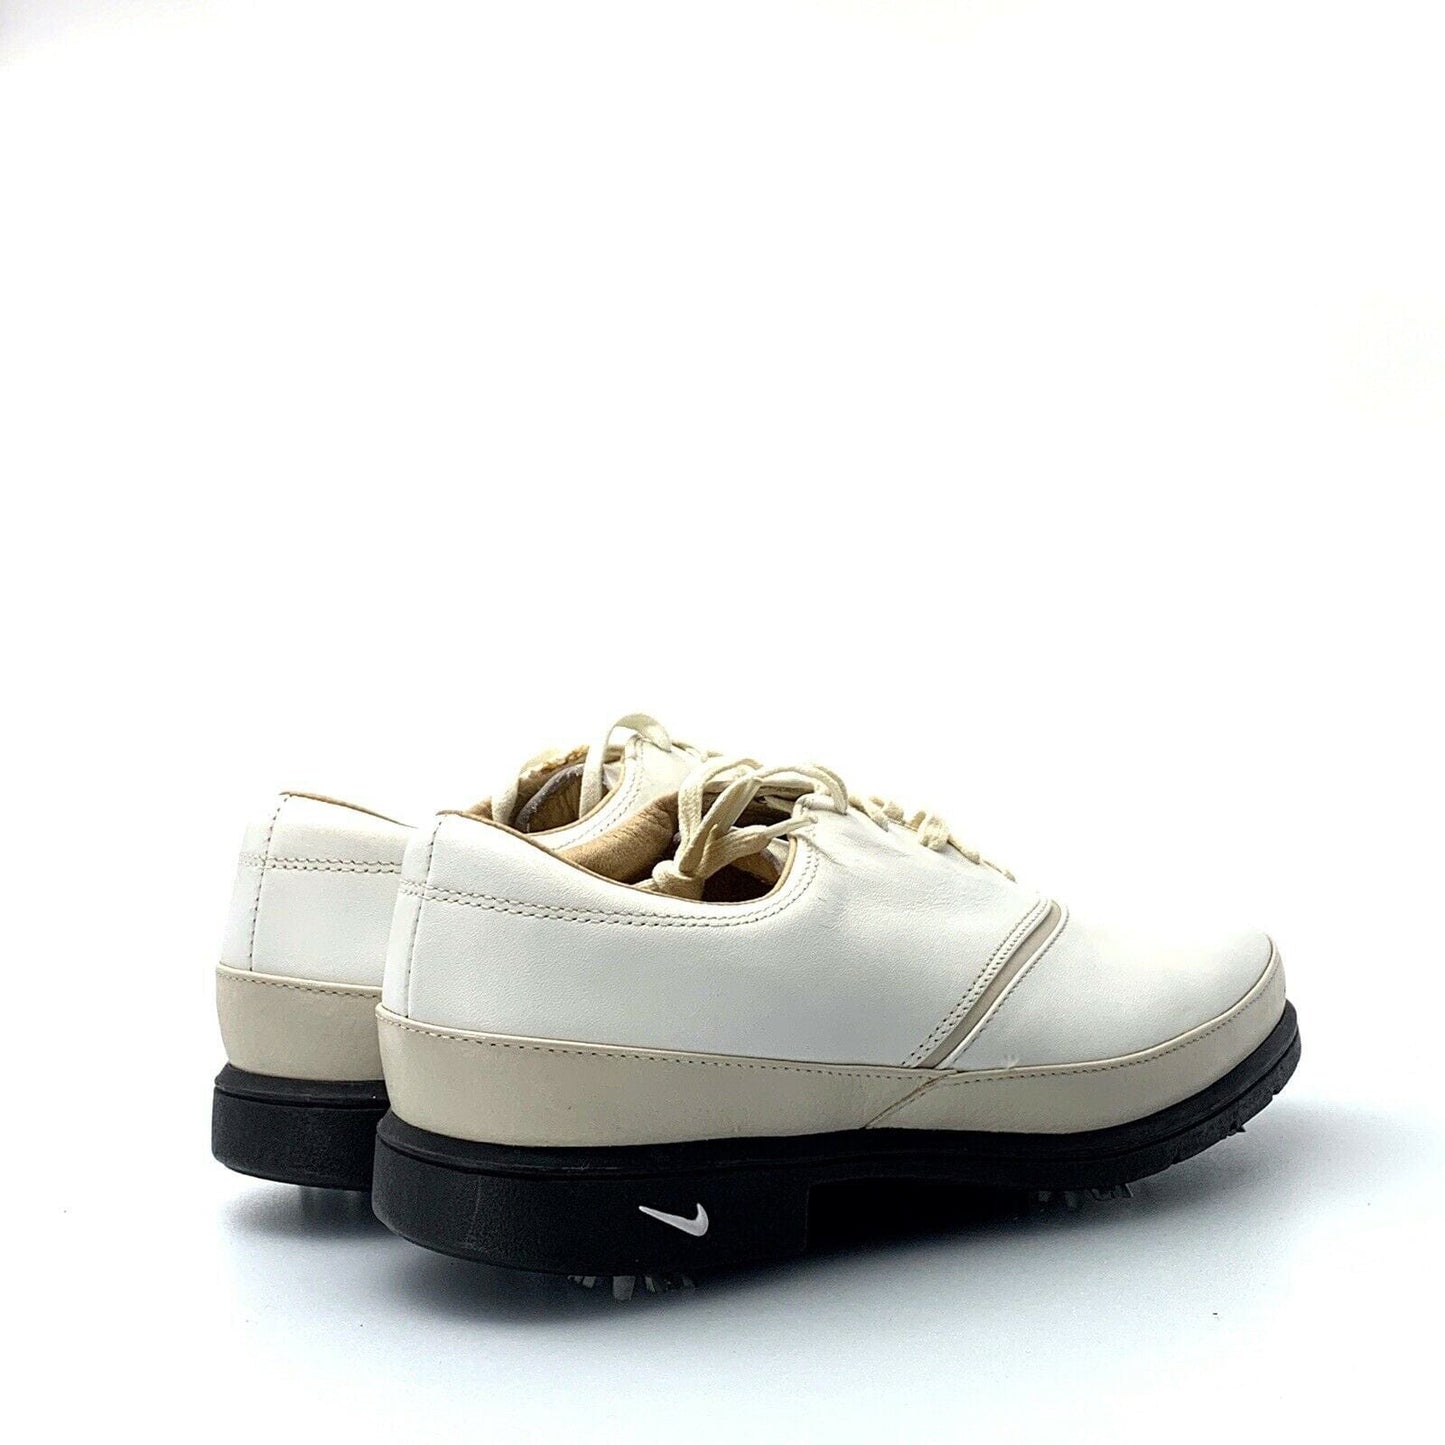 NEW Nike Womens Leather Air Comfort Verdana Lace Up Golf Shoes, White - Size 7 - parsimonyshoppes